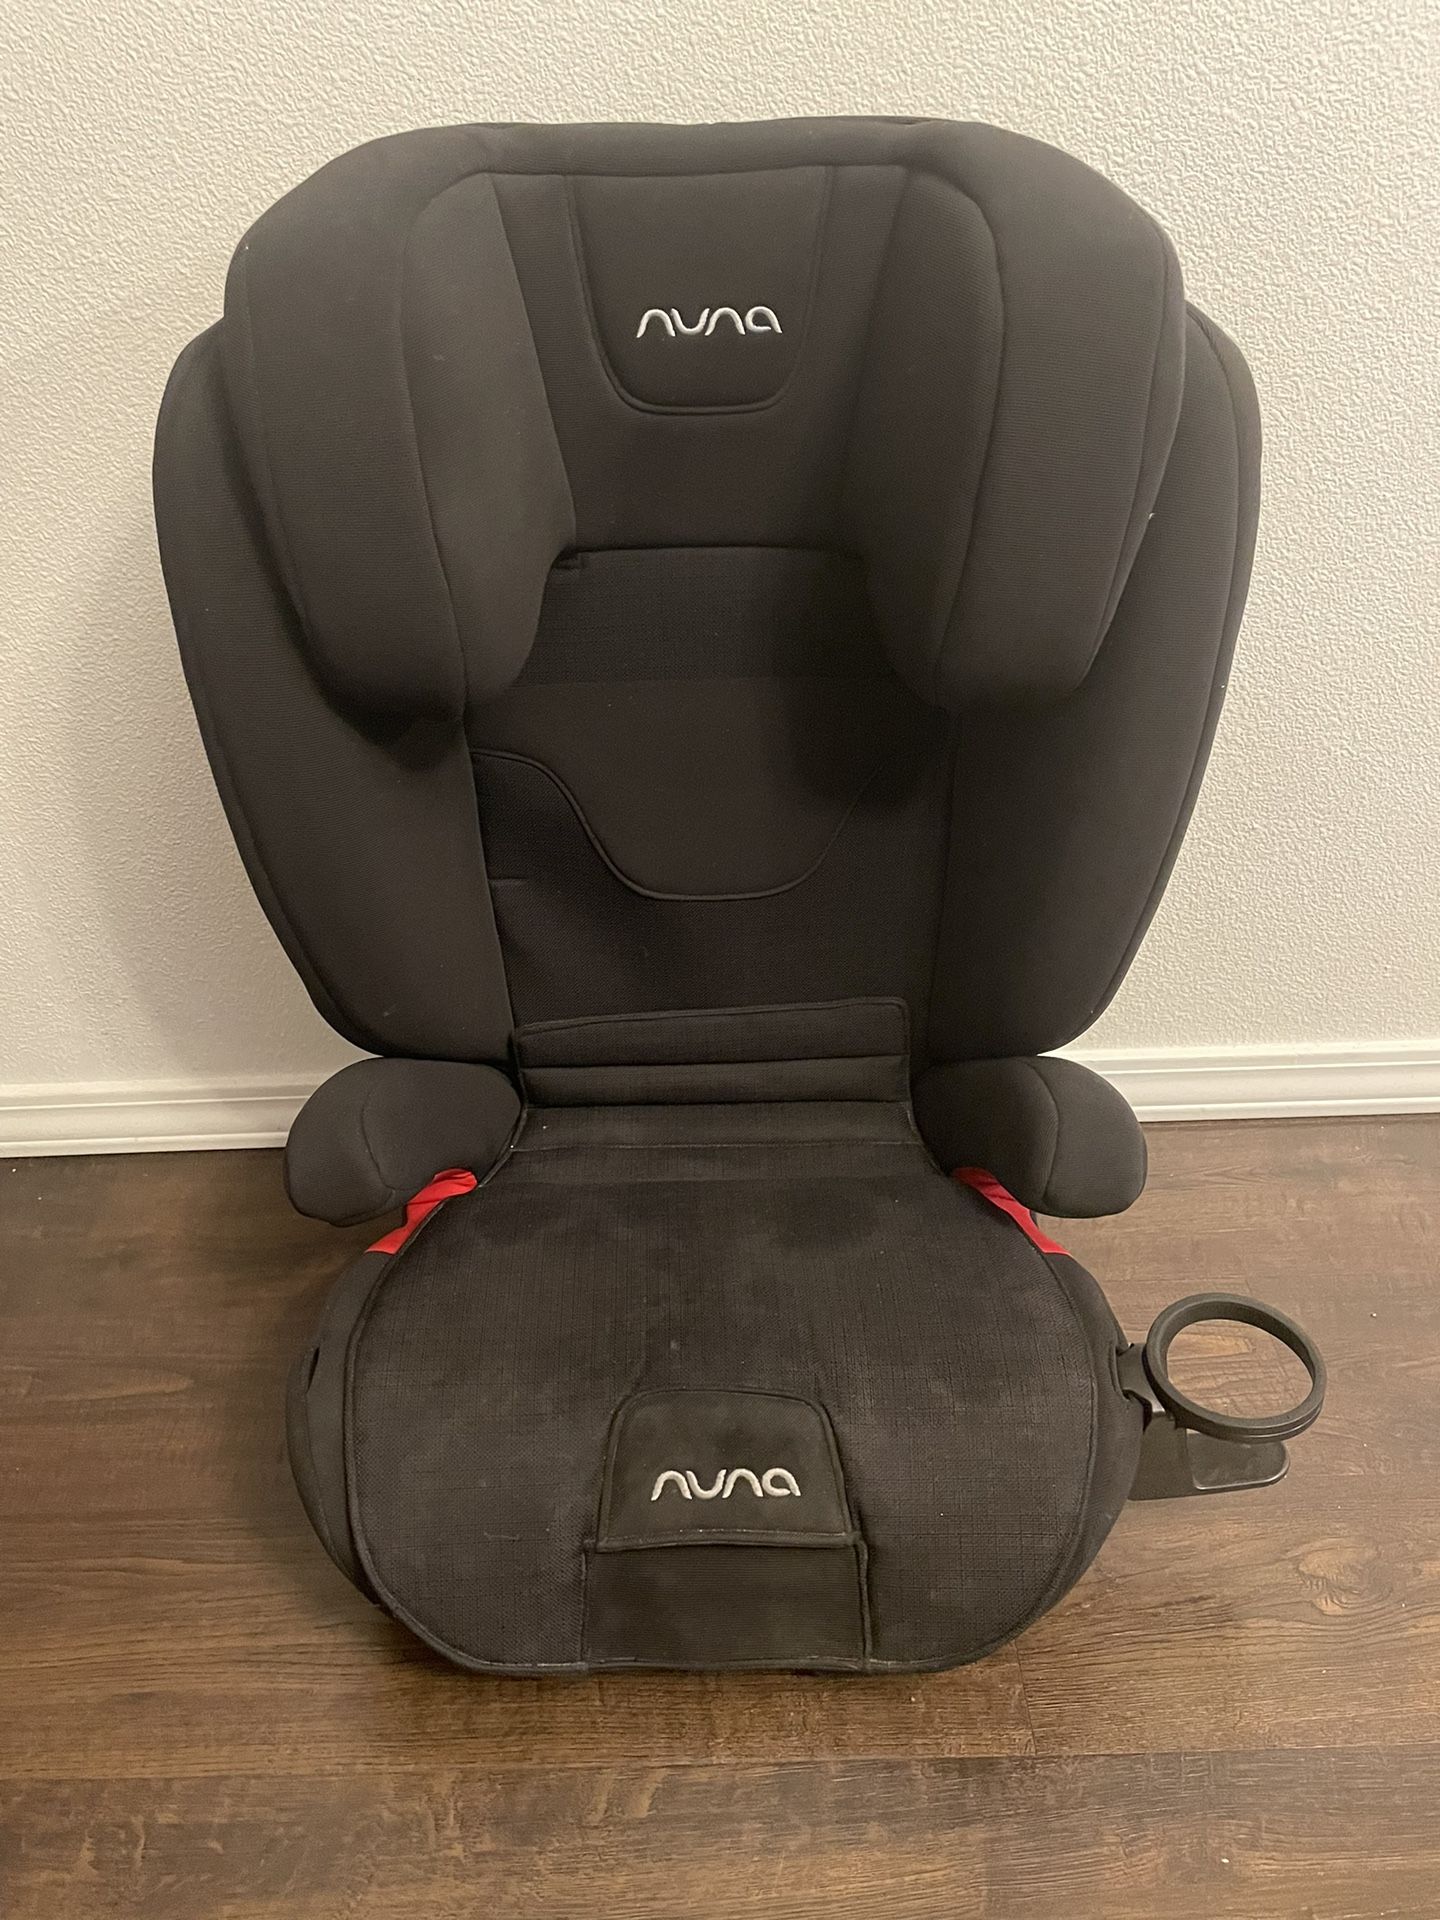 Nuna booster seat